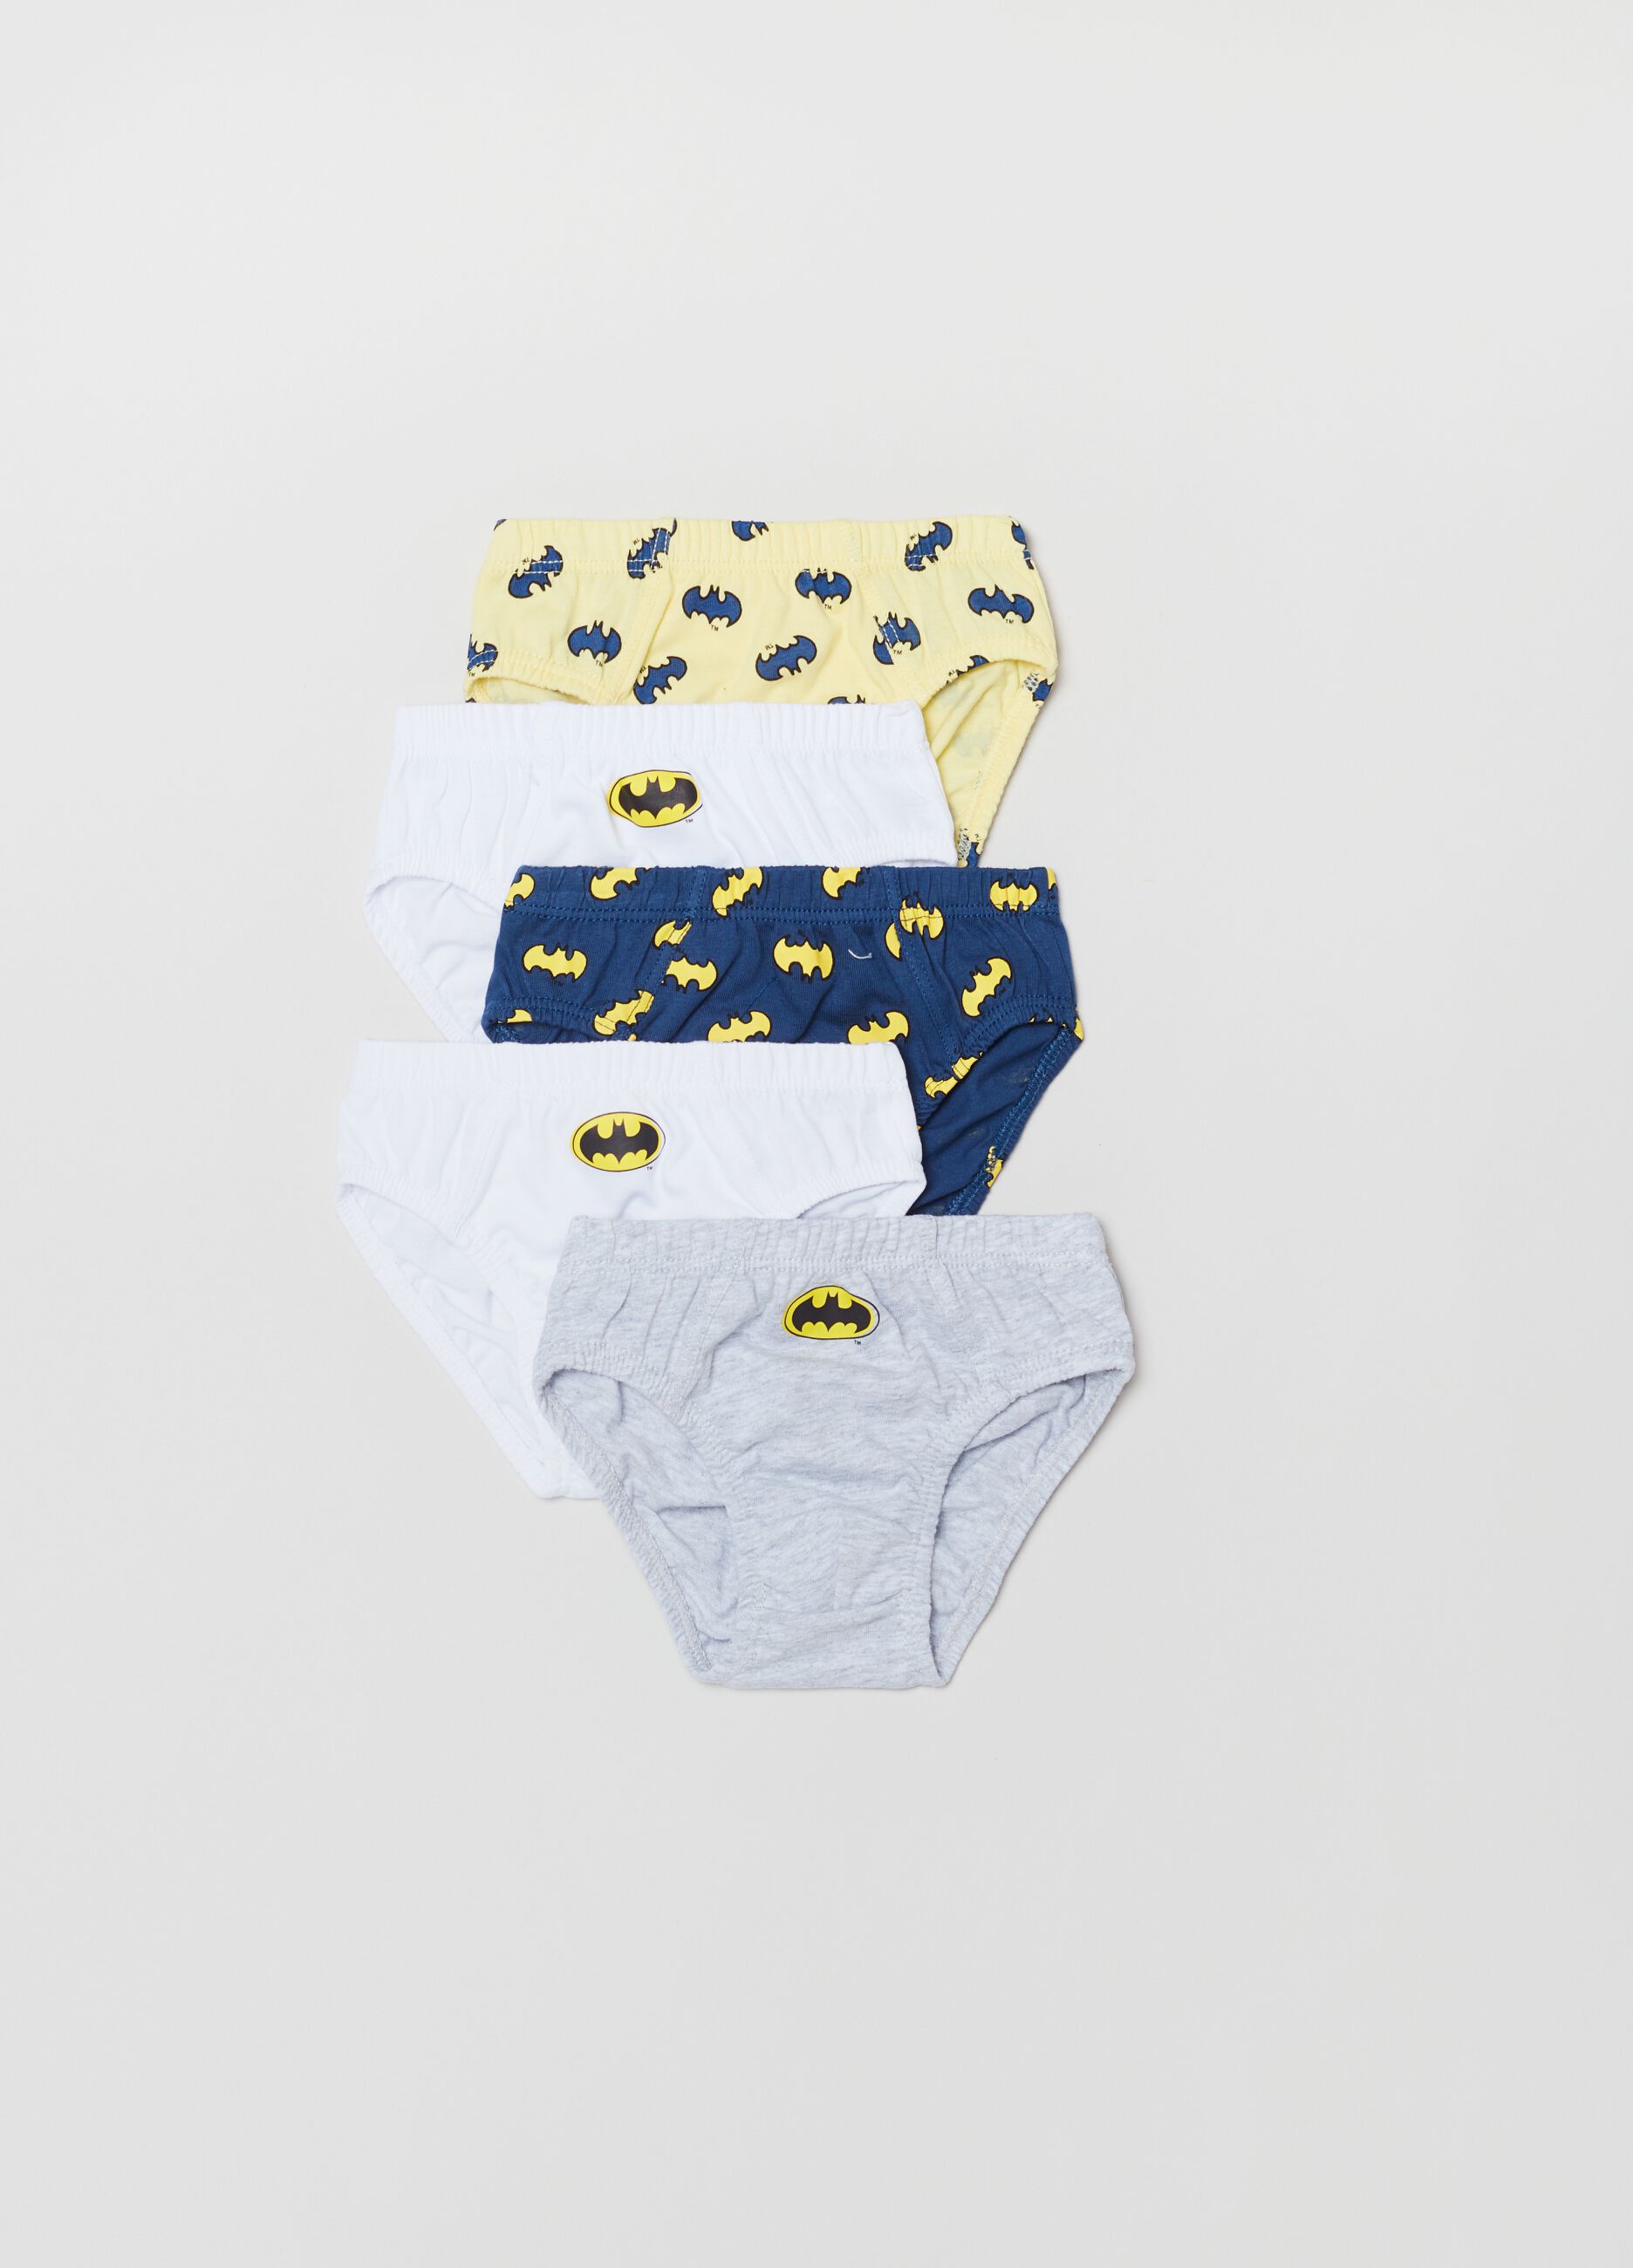 FAGOTTINO Baby Boy's White/Grey Five-pack briefs with Batman print